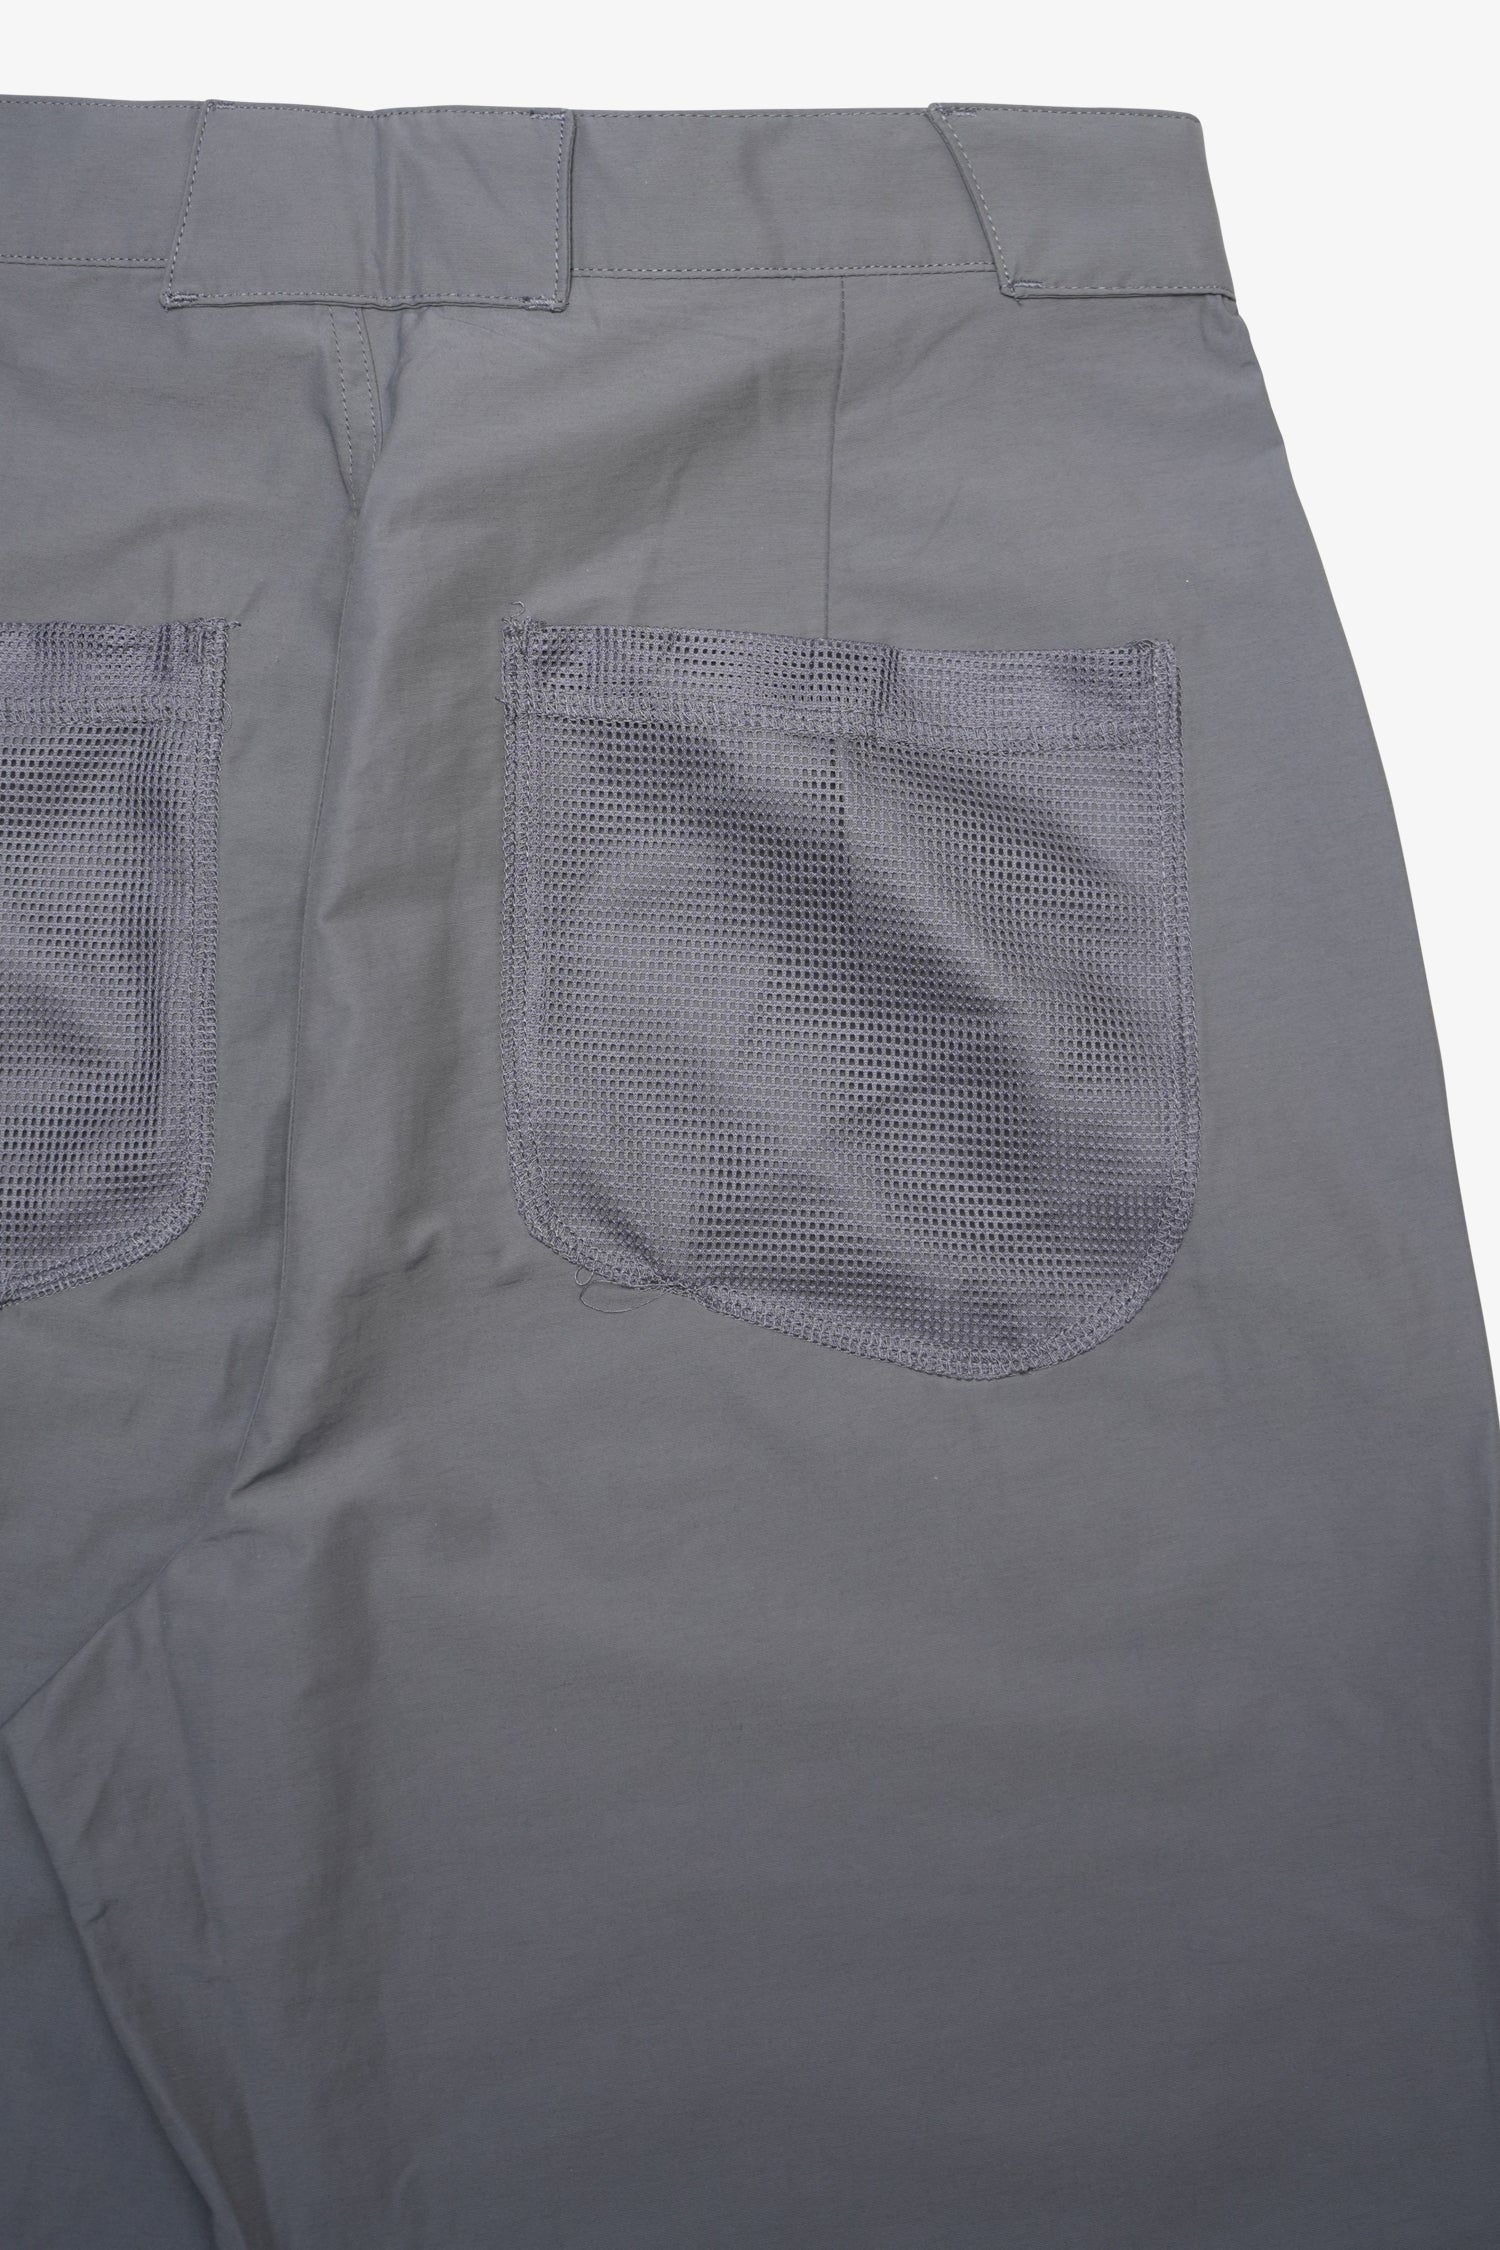 Webbing Patched Pants- Selectshop FRAME